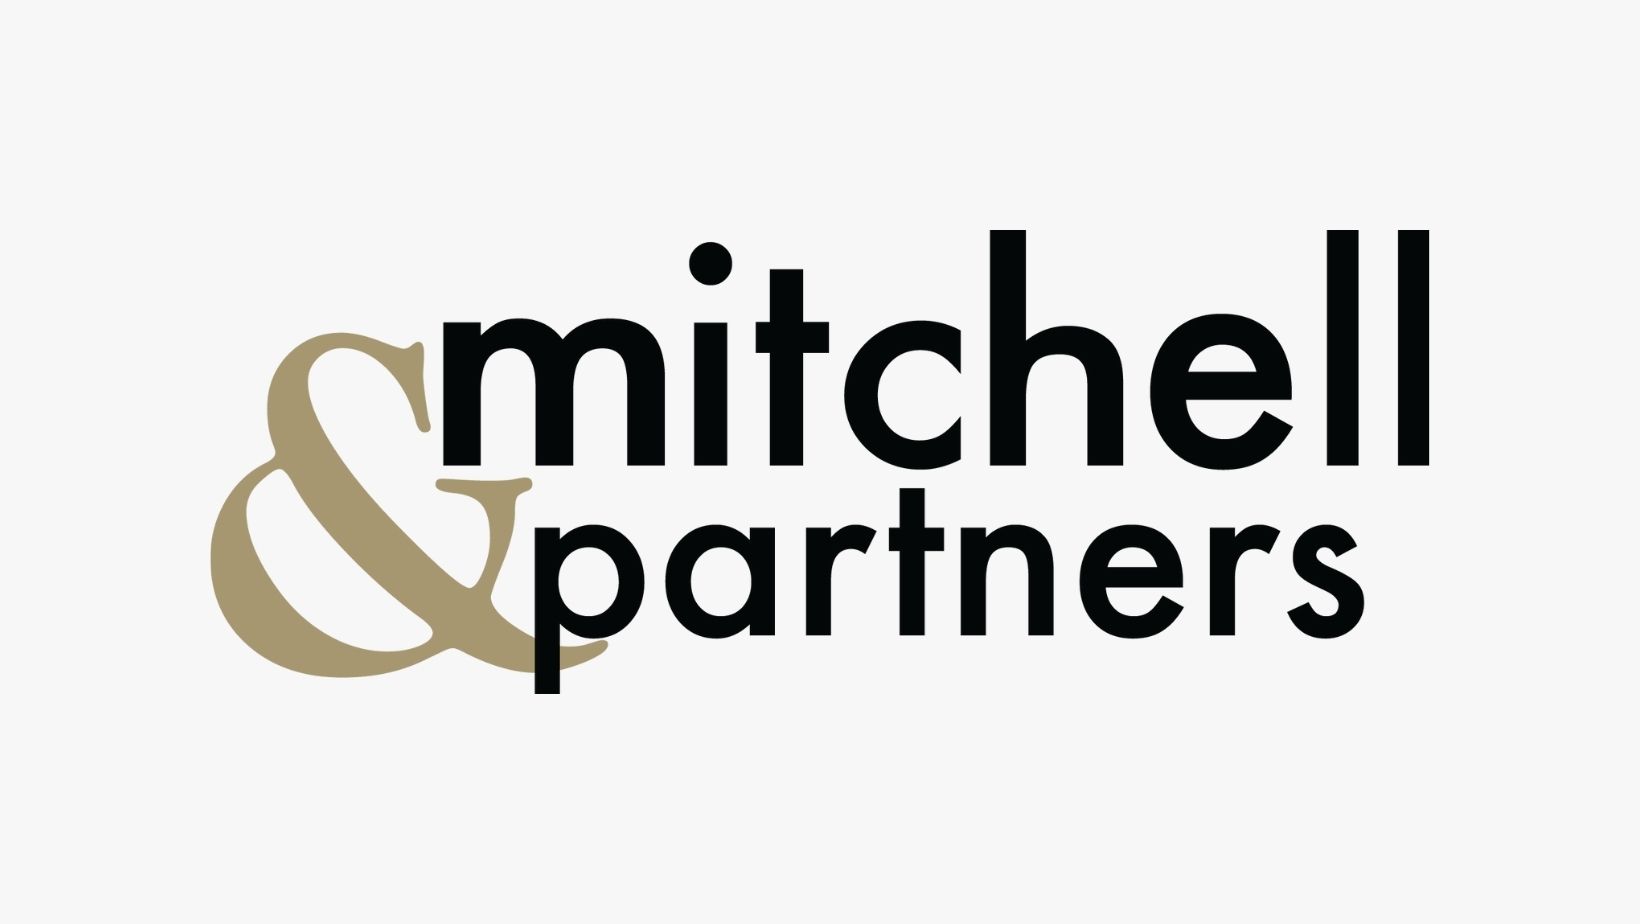 Mitchell & Partners